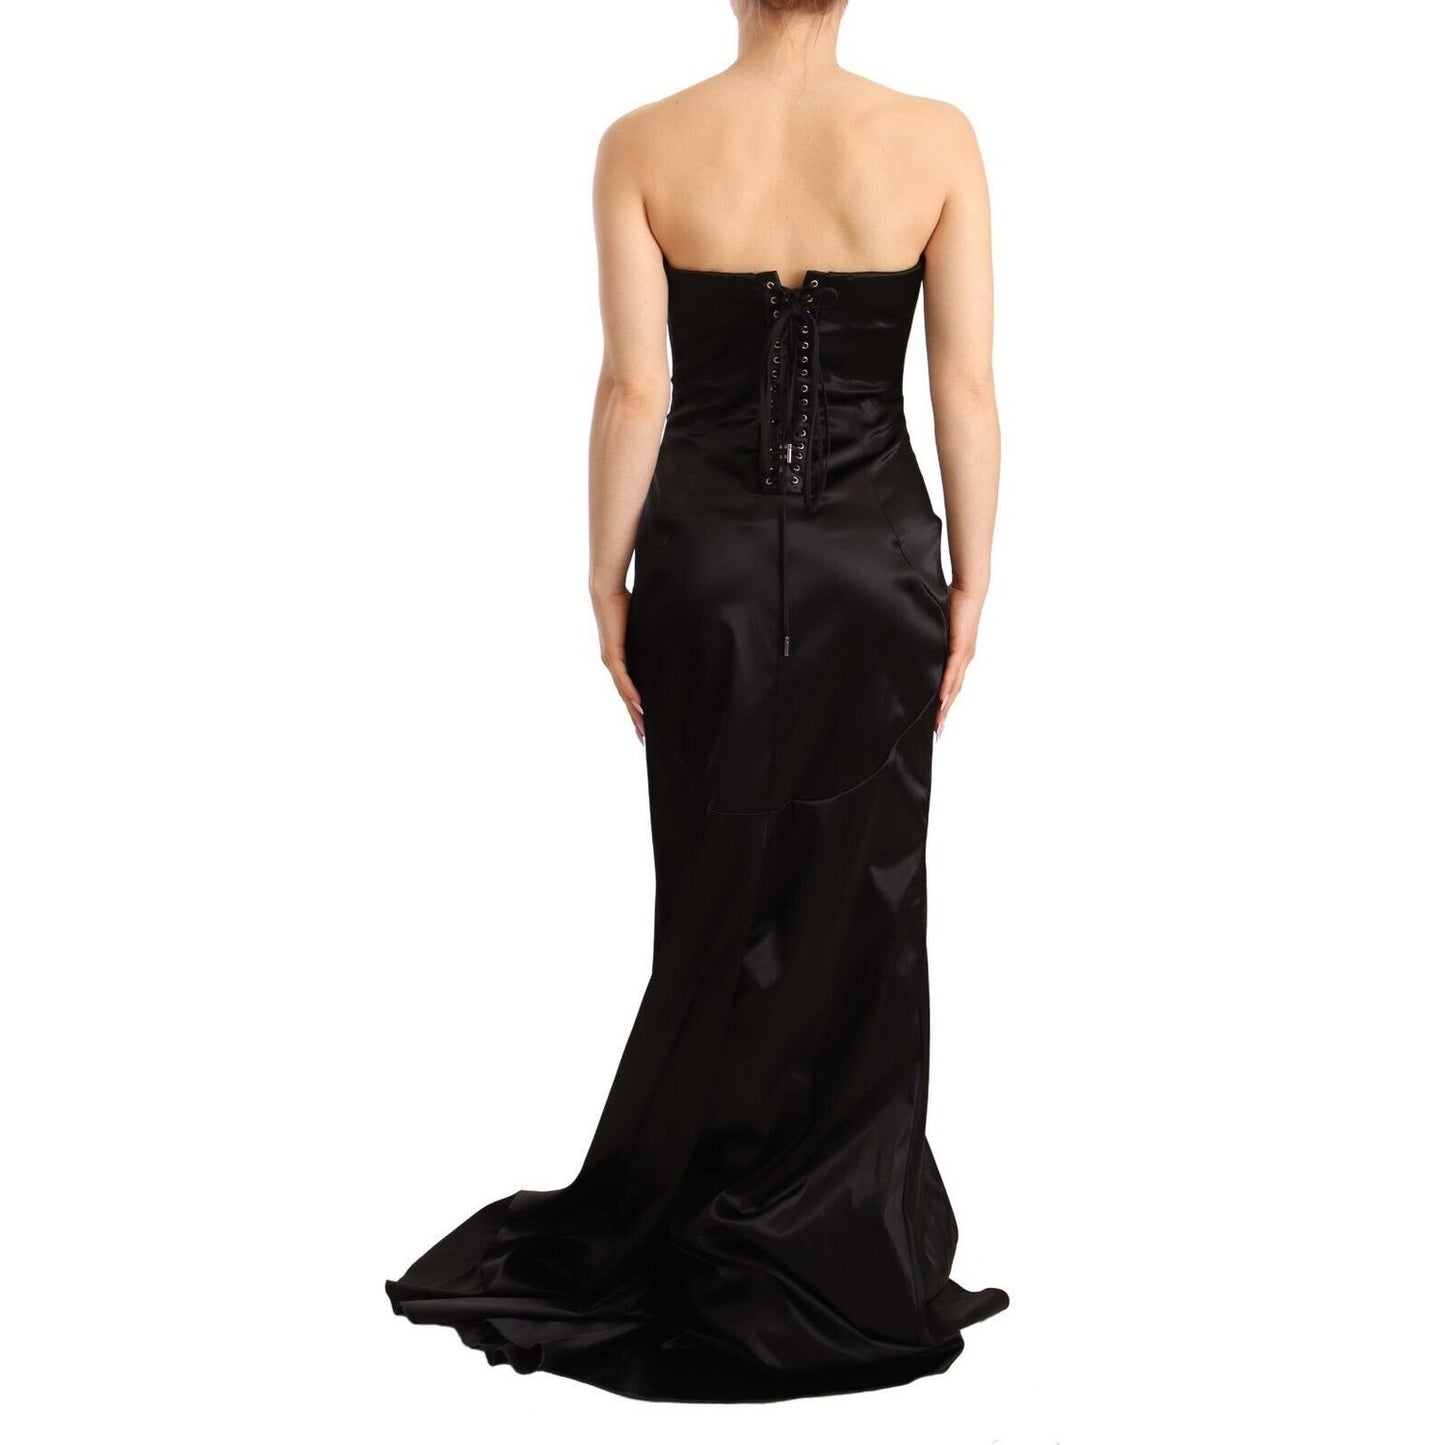 Dolce & GabbanaElegant Black Strapless Mermaid DressMcRichard Designer Brands£1869.00